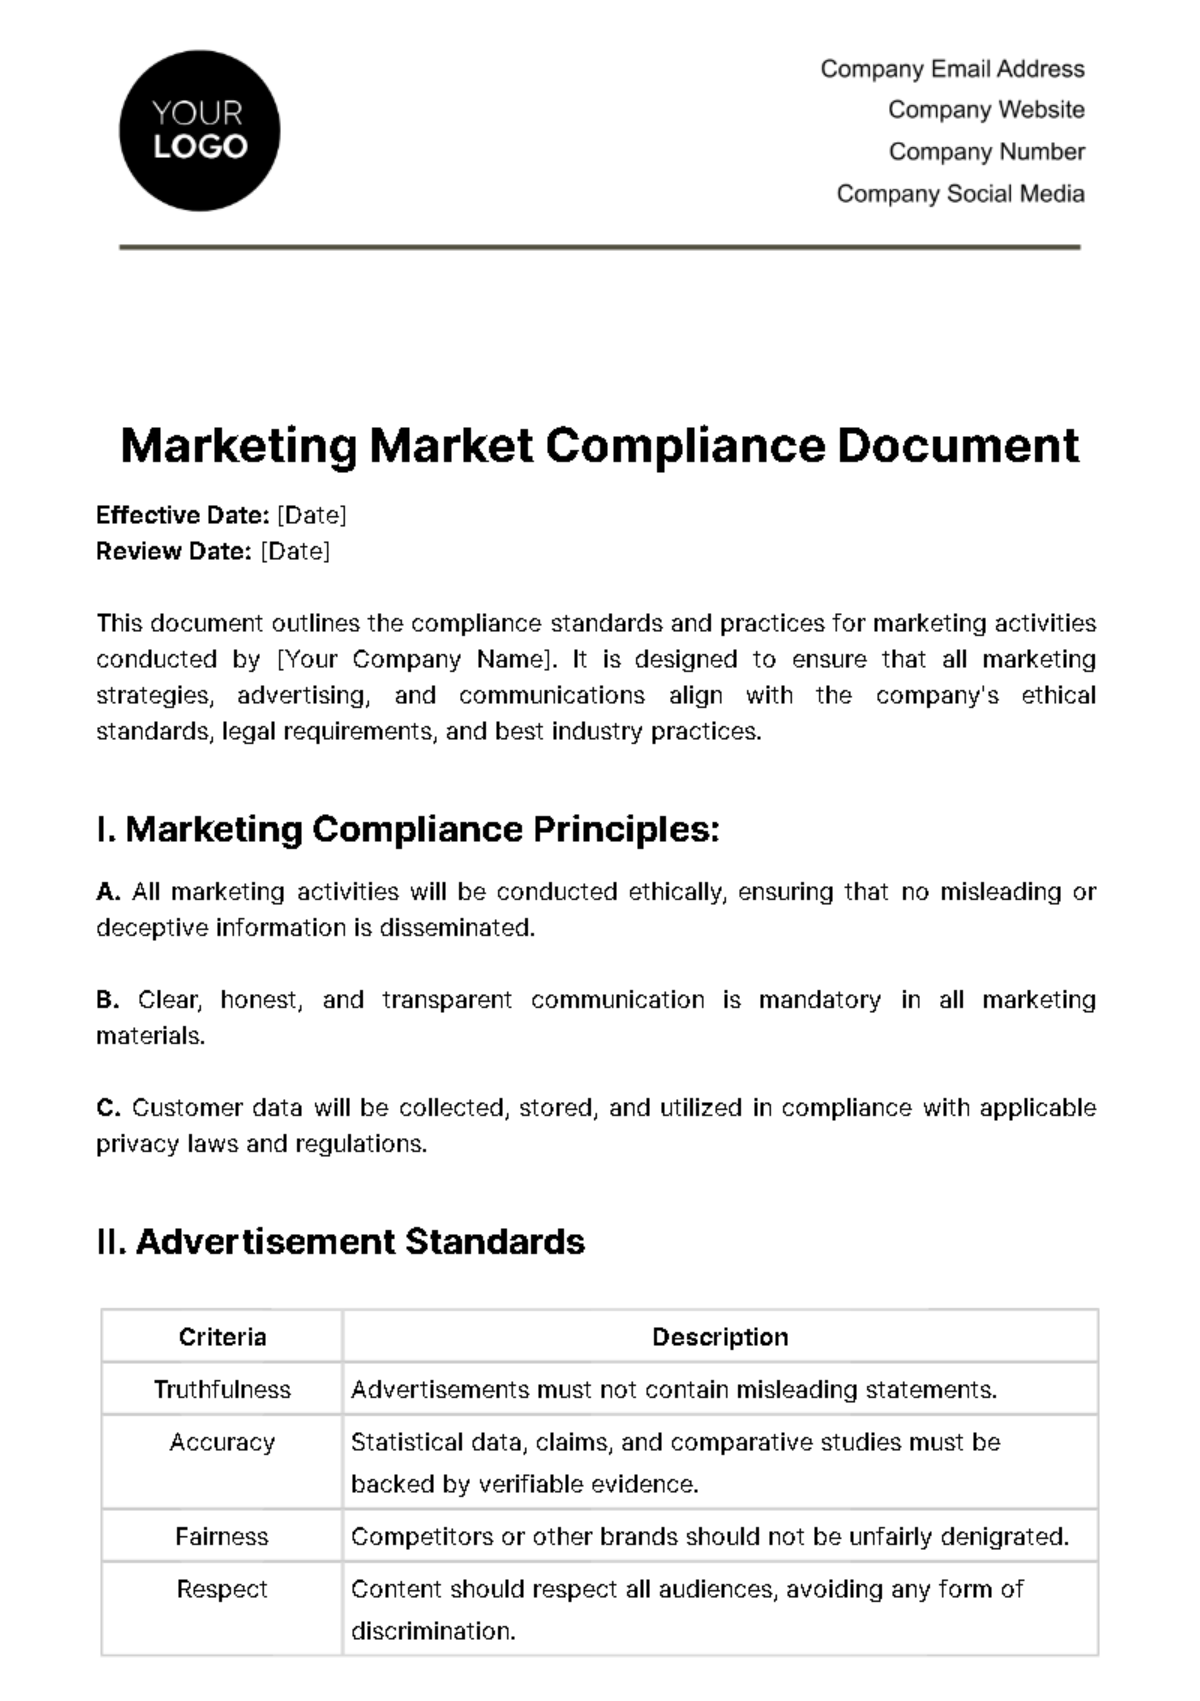 Marketing Market Compliance Document Template